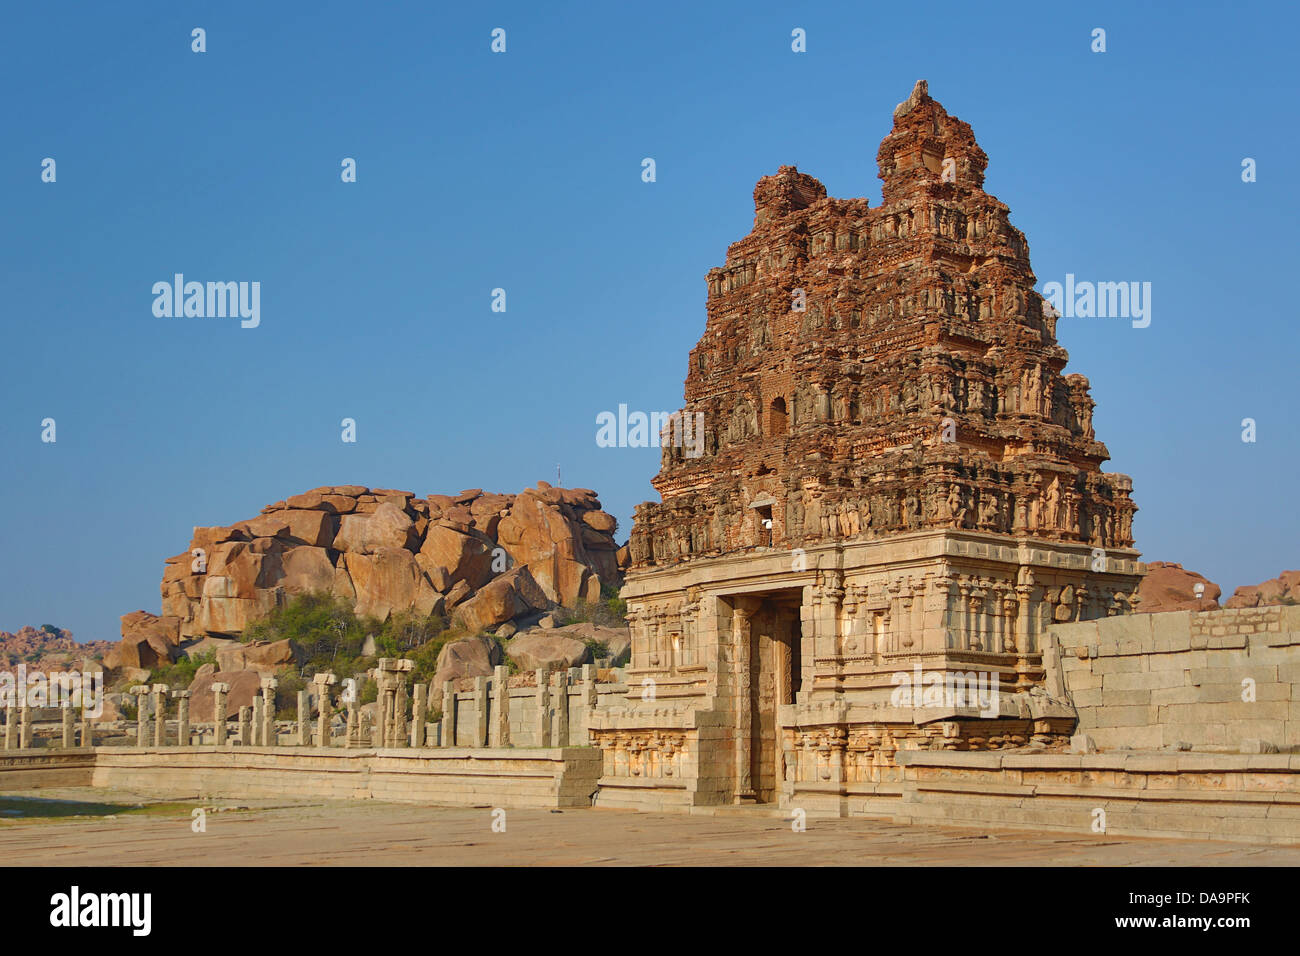 Indien, Süd-Indien, Asien, Karnataka, Hampi, Ruinen, Vijayanagar, 15. Jahrhundert, Weltkulturerbe, Vittala, Tempel, Architektur, Kultur Stockfoto